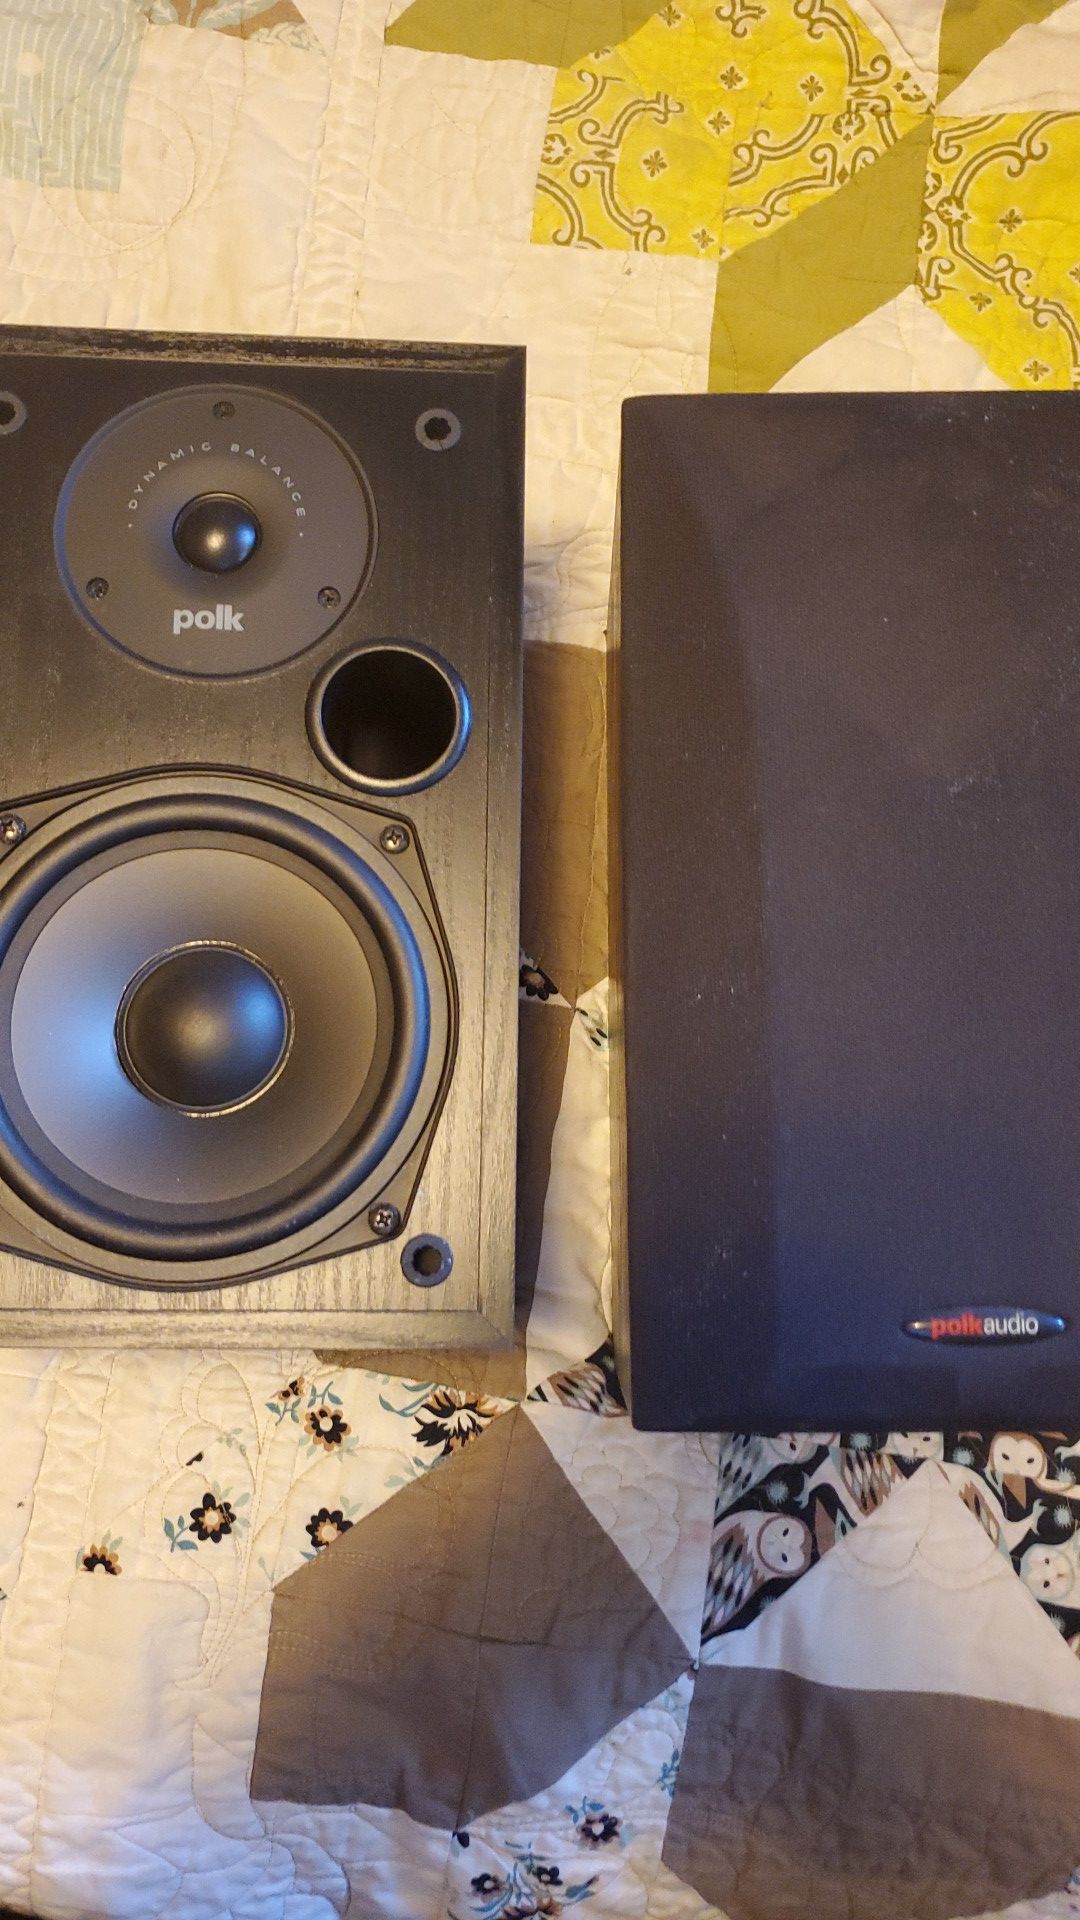 Polk audio 100watt speakers model T15